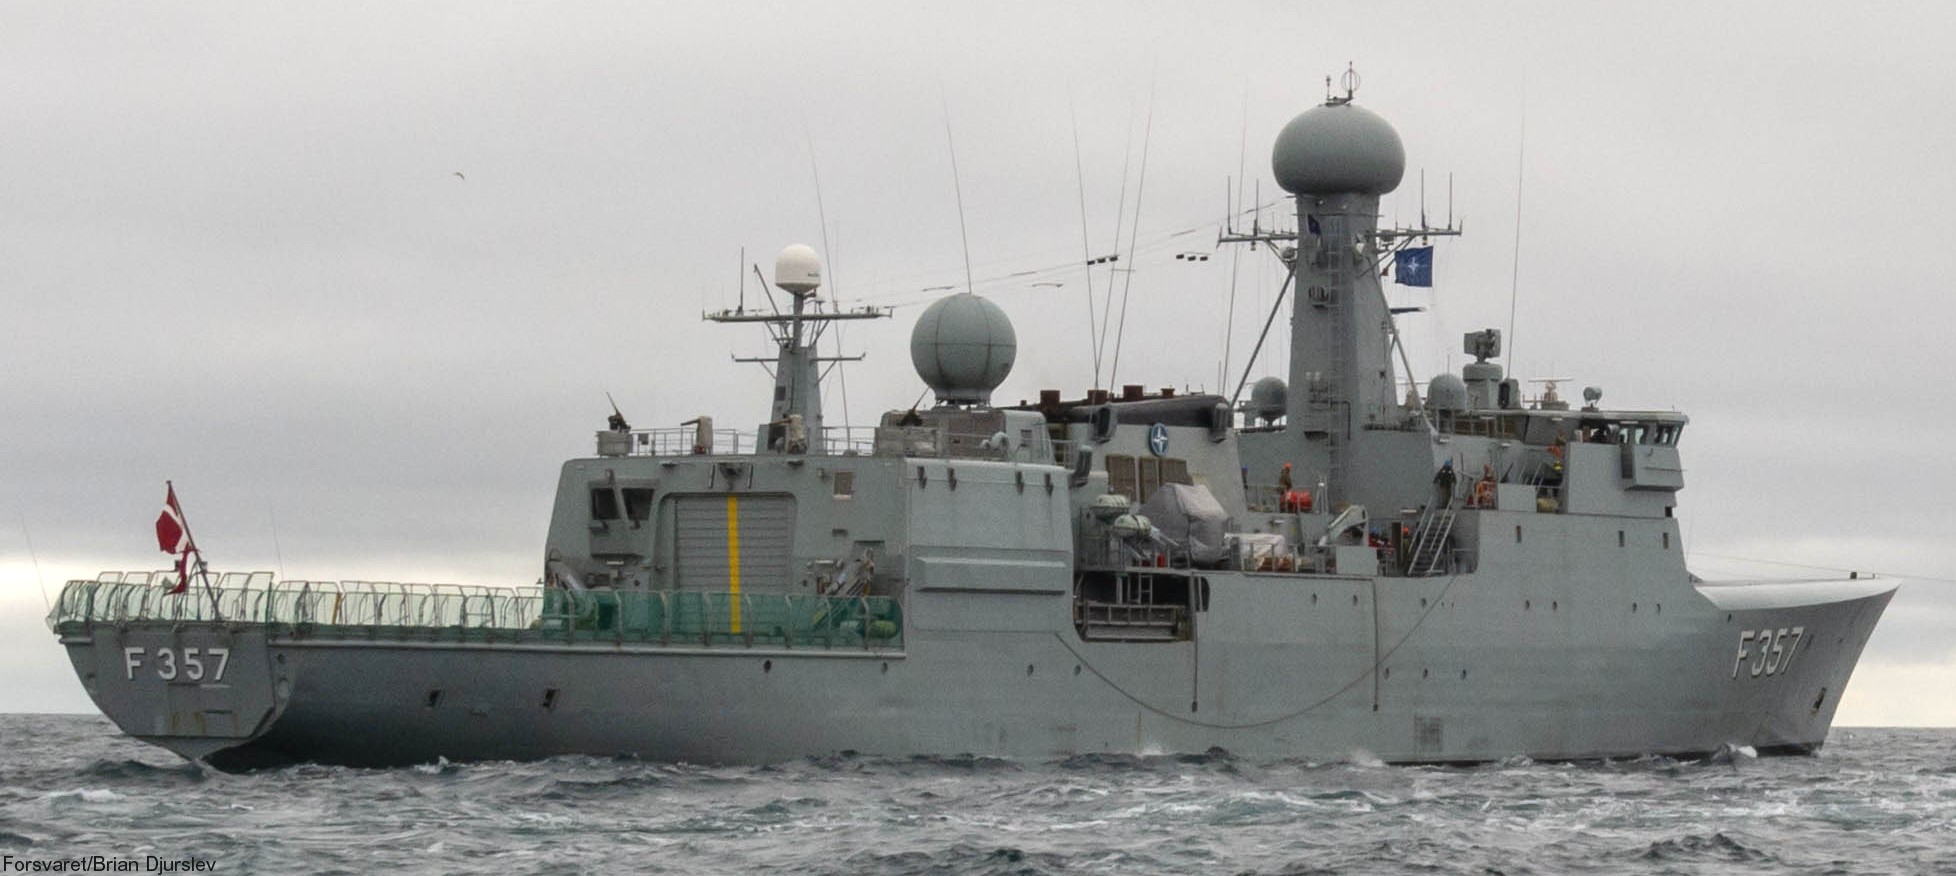 f-357 hdms thetis ocean patrol frigate royal danish navy kongelige danske marine inspektionsskibet 16